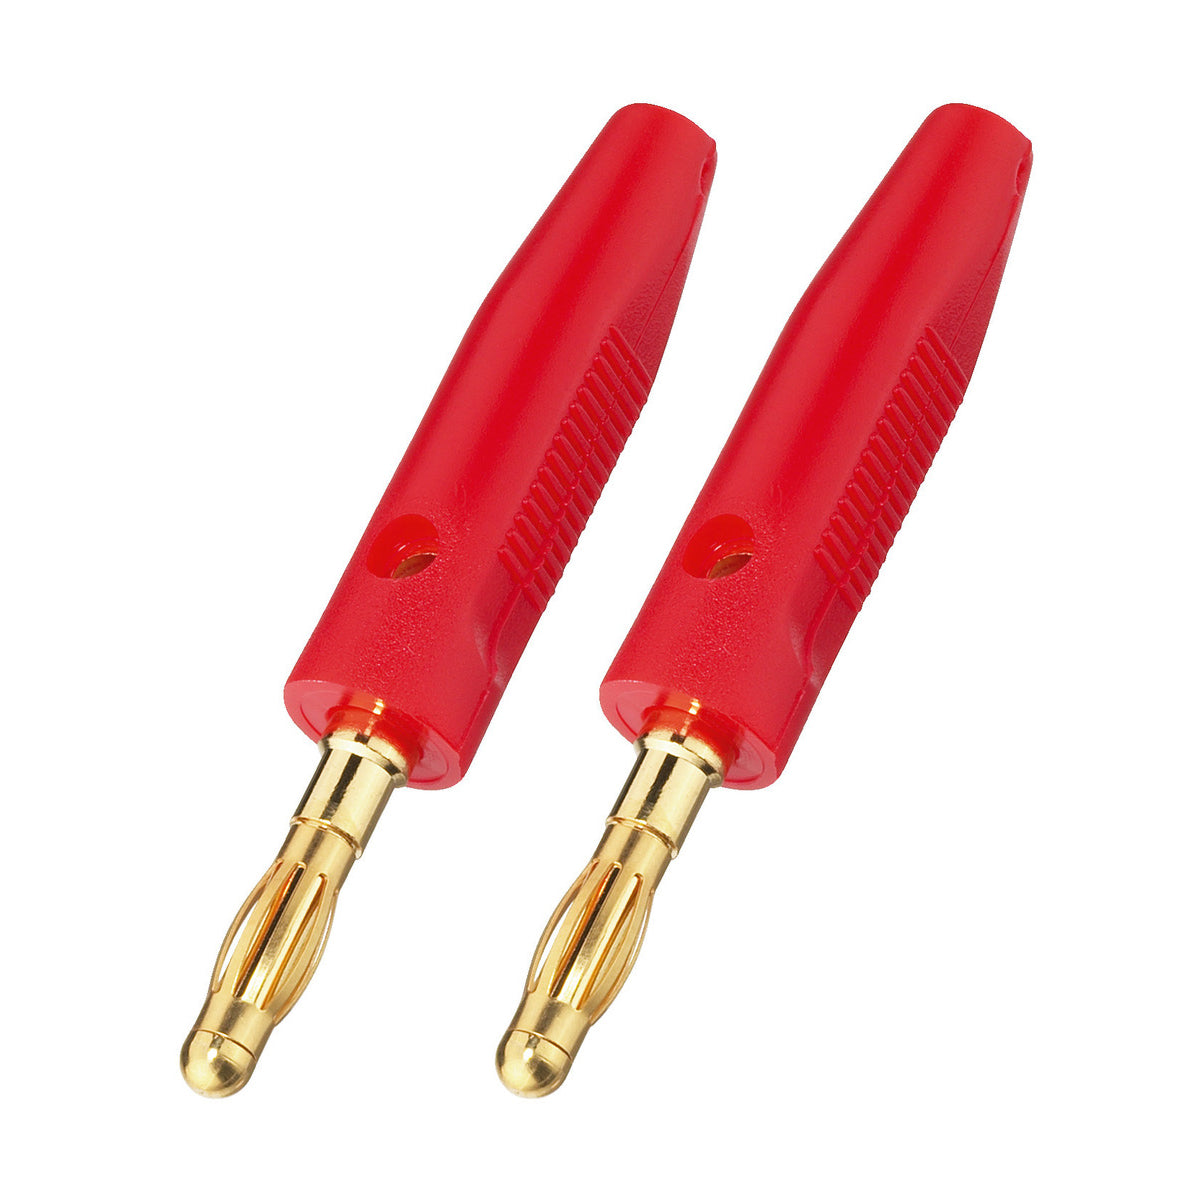 Monacor BP-30G Banana Plugs - Red